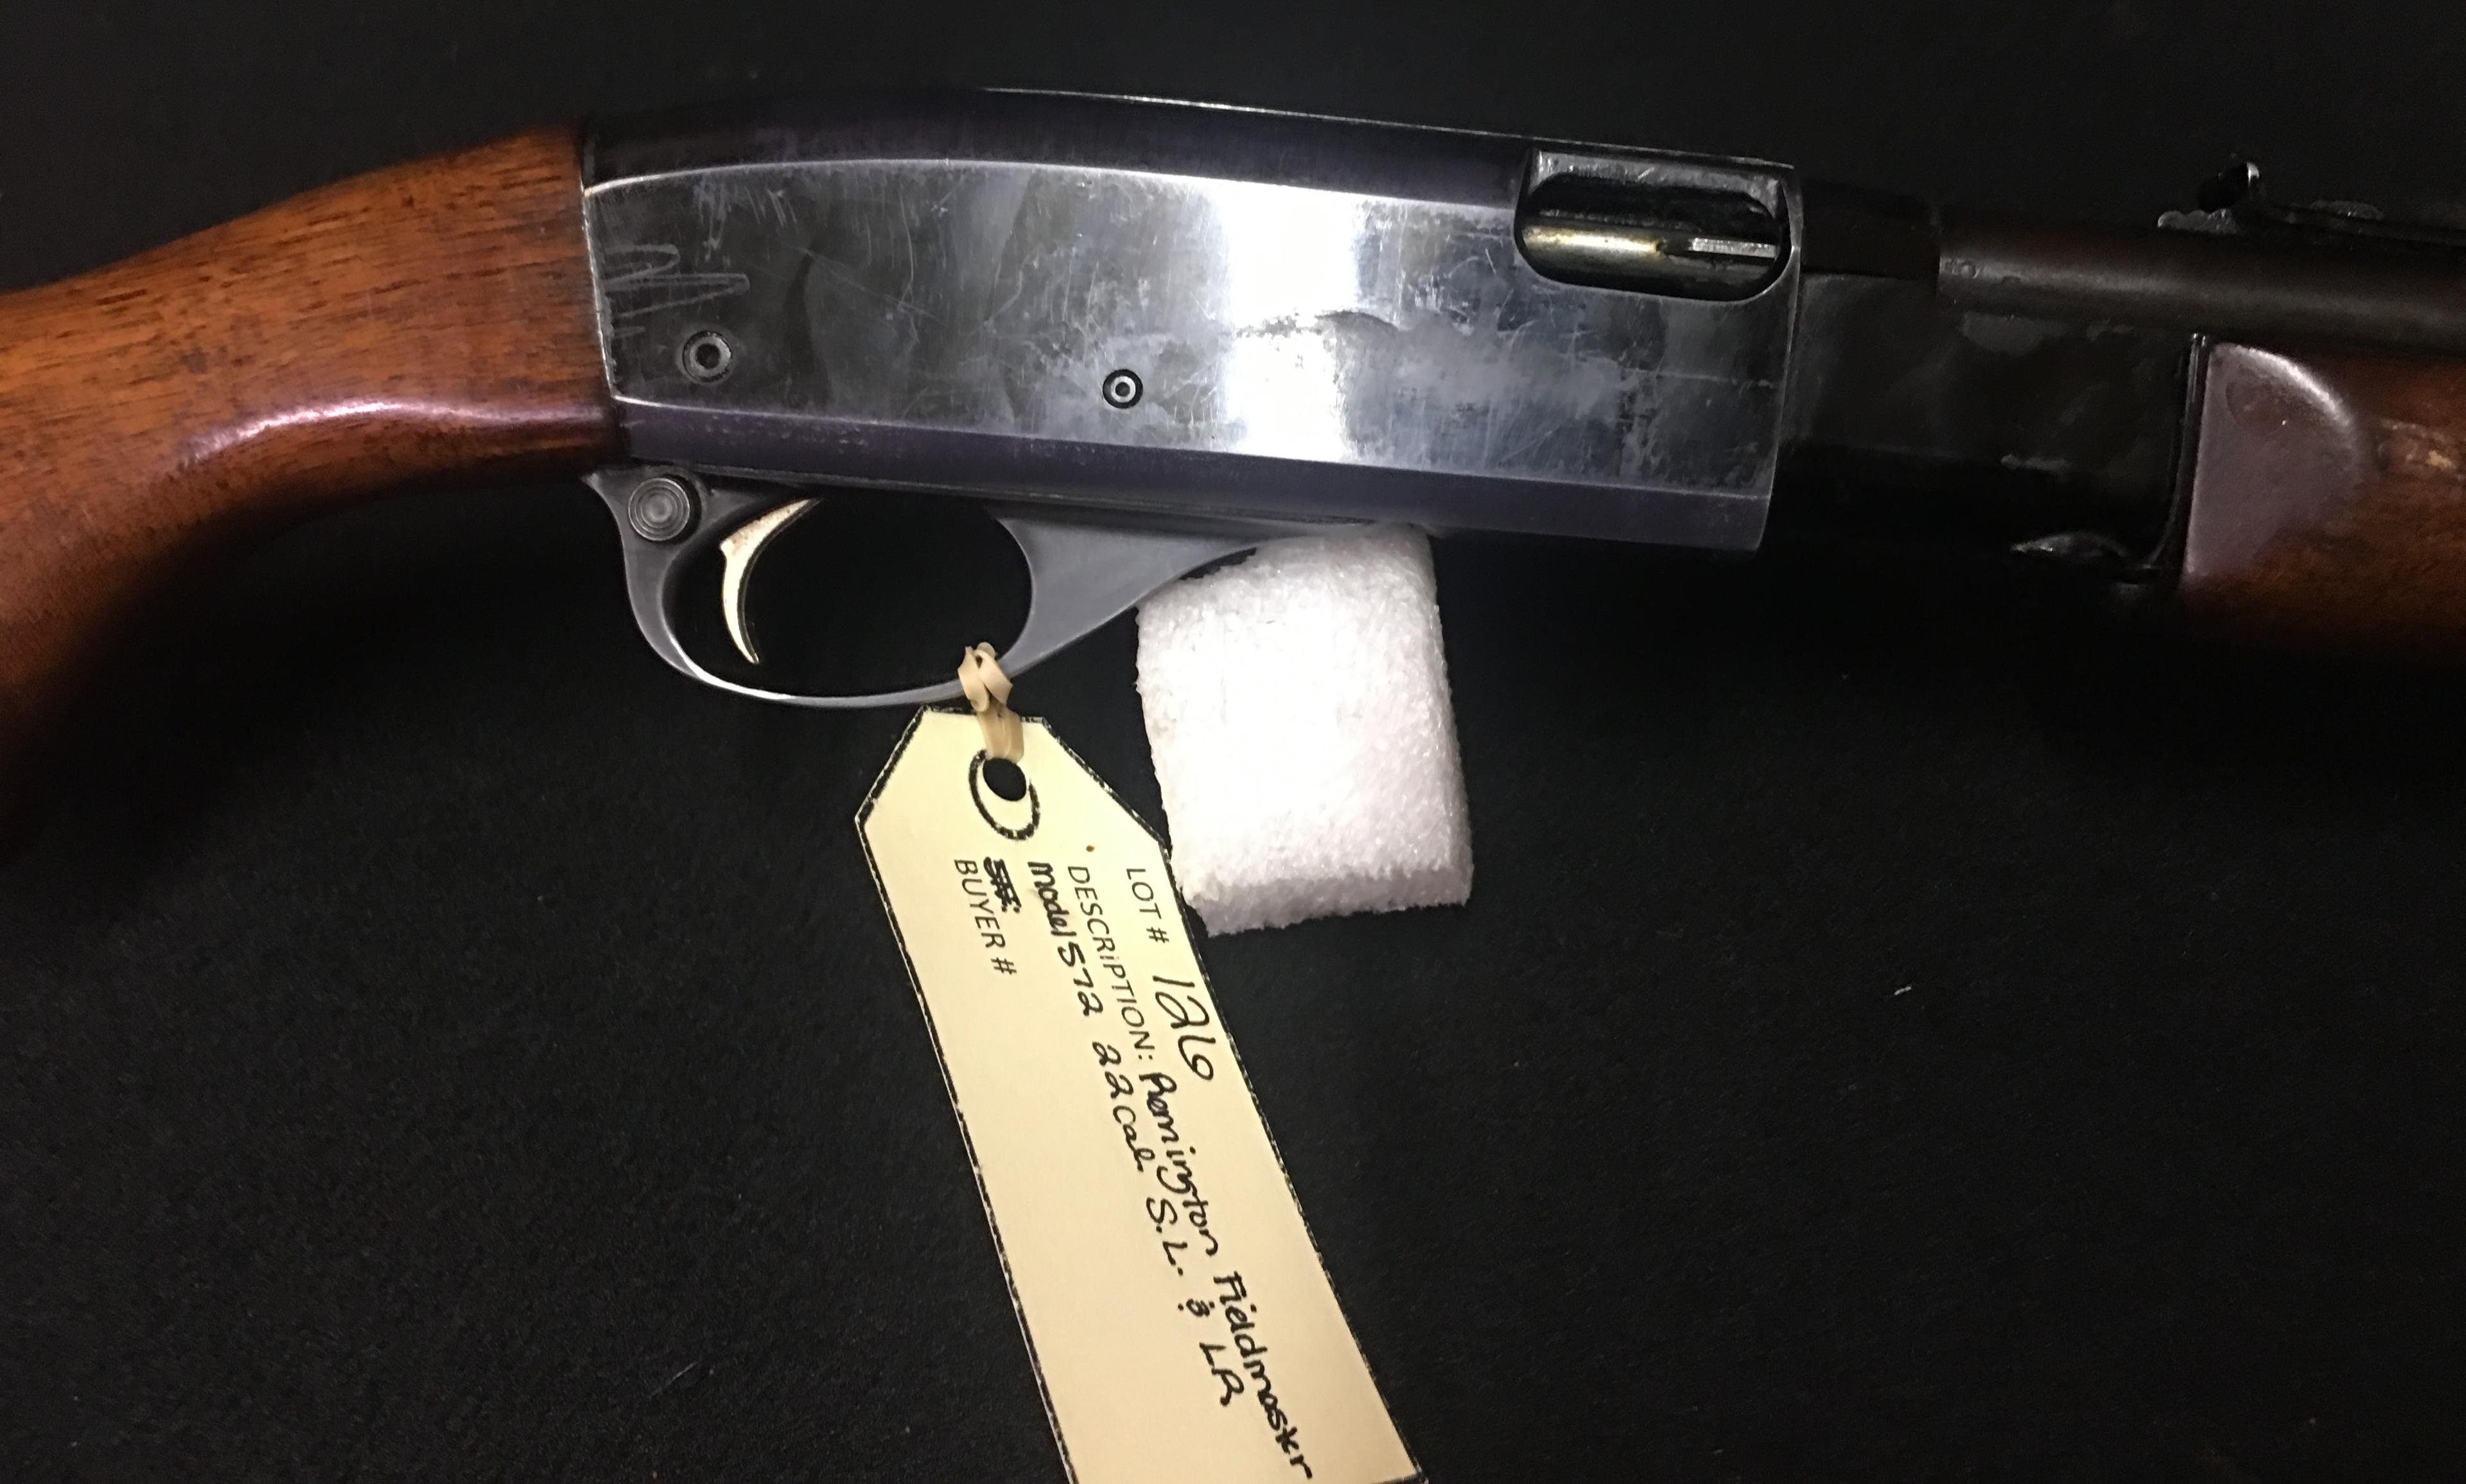 Remington Fieldmaster Model 572 22 Cal S. L. & LR